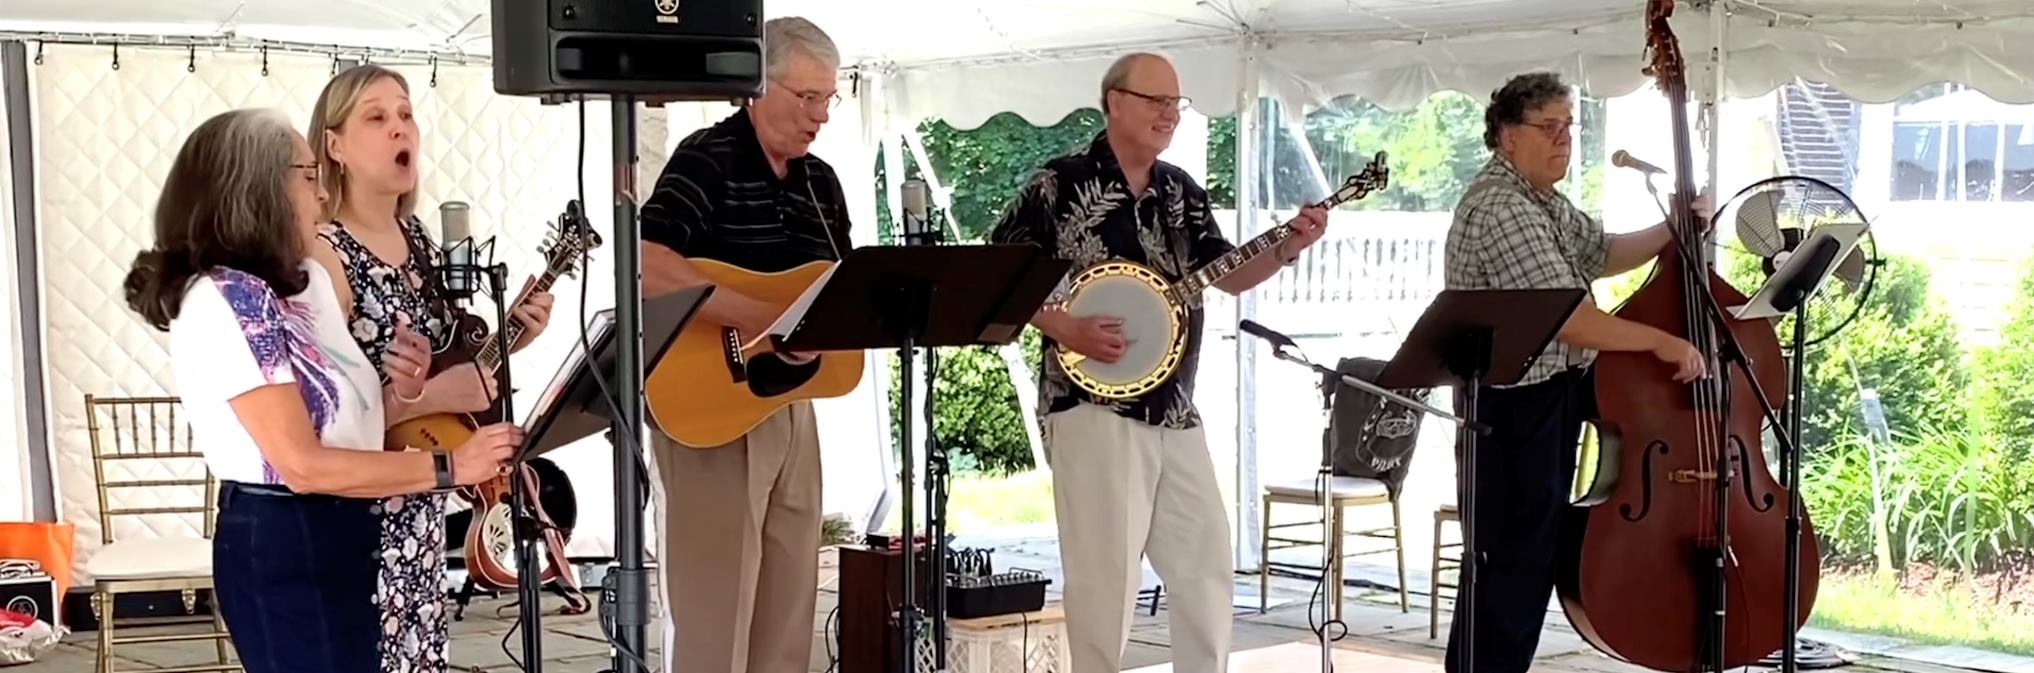 Pilgrim Bluegrass Gospel Band joins us in worship